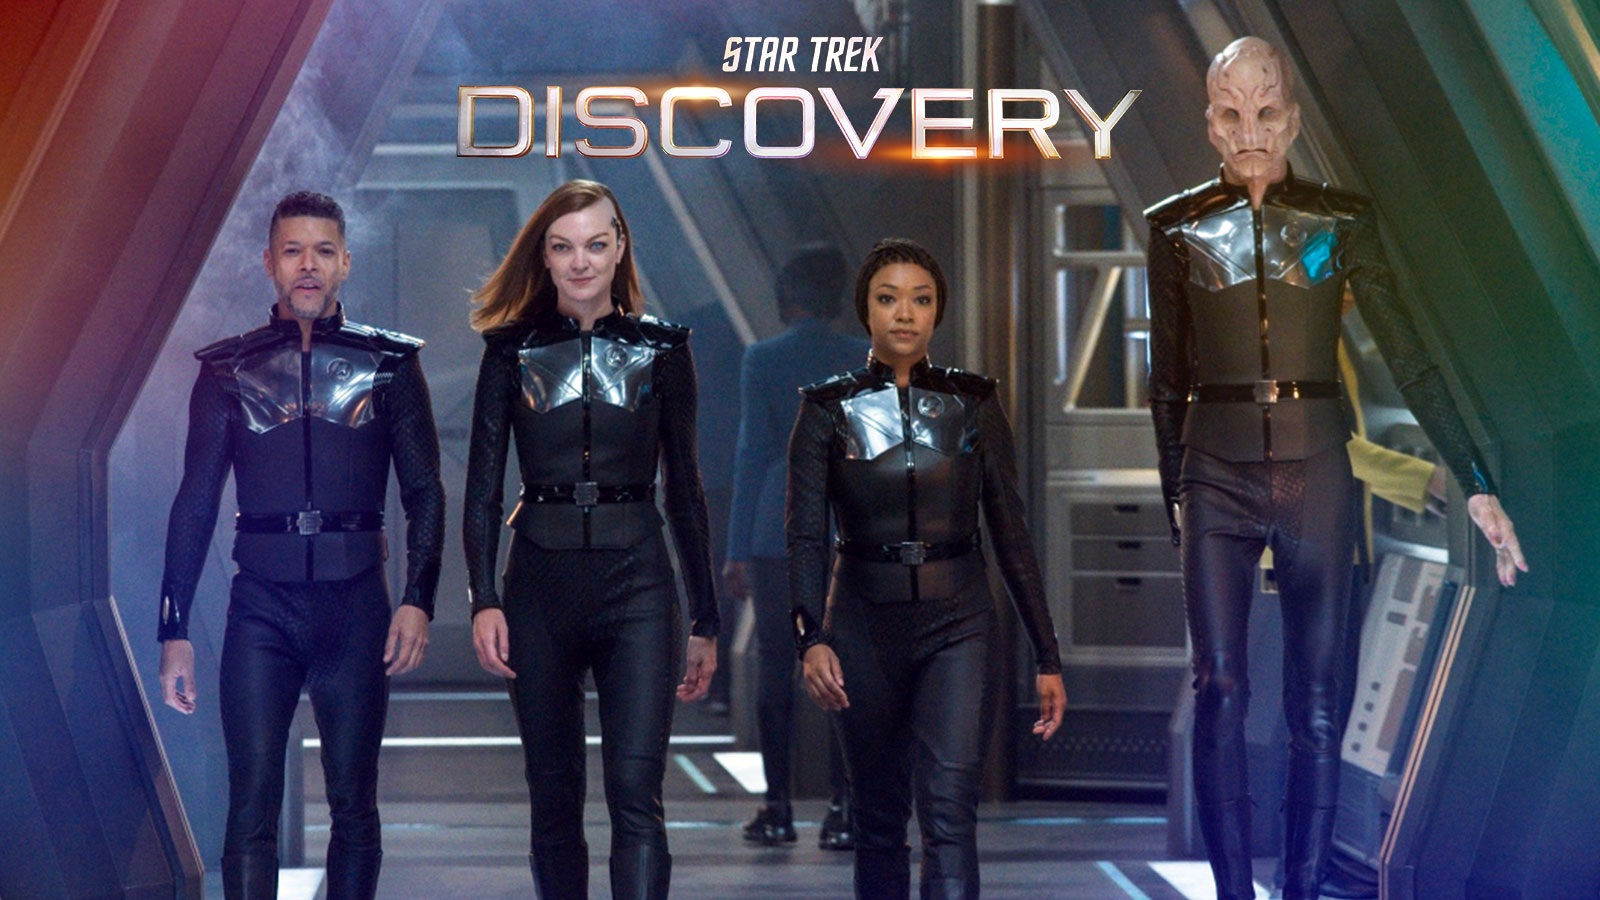 Star Trek: Discovery Episode 411 "Rosetta" Preview + New Photos